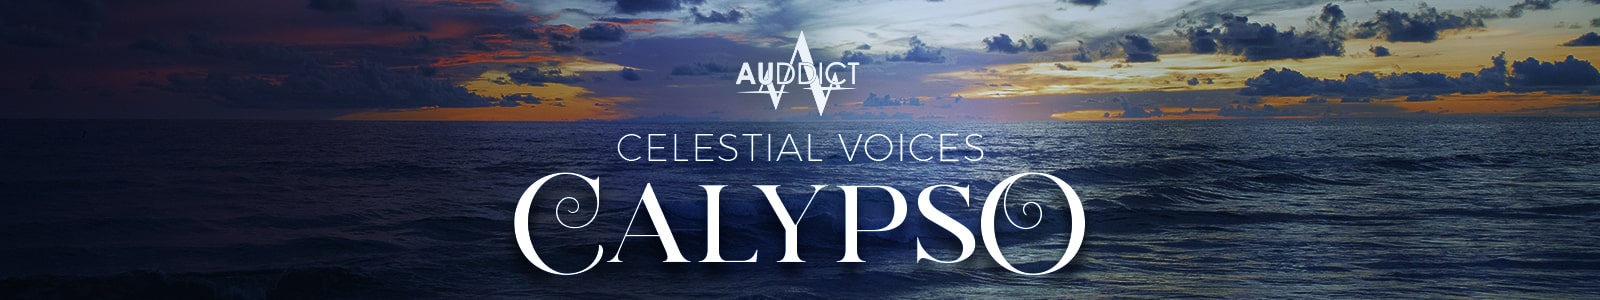 Celestial Voices Calypso by Auddict